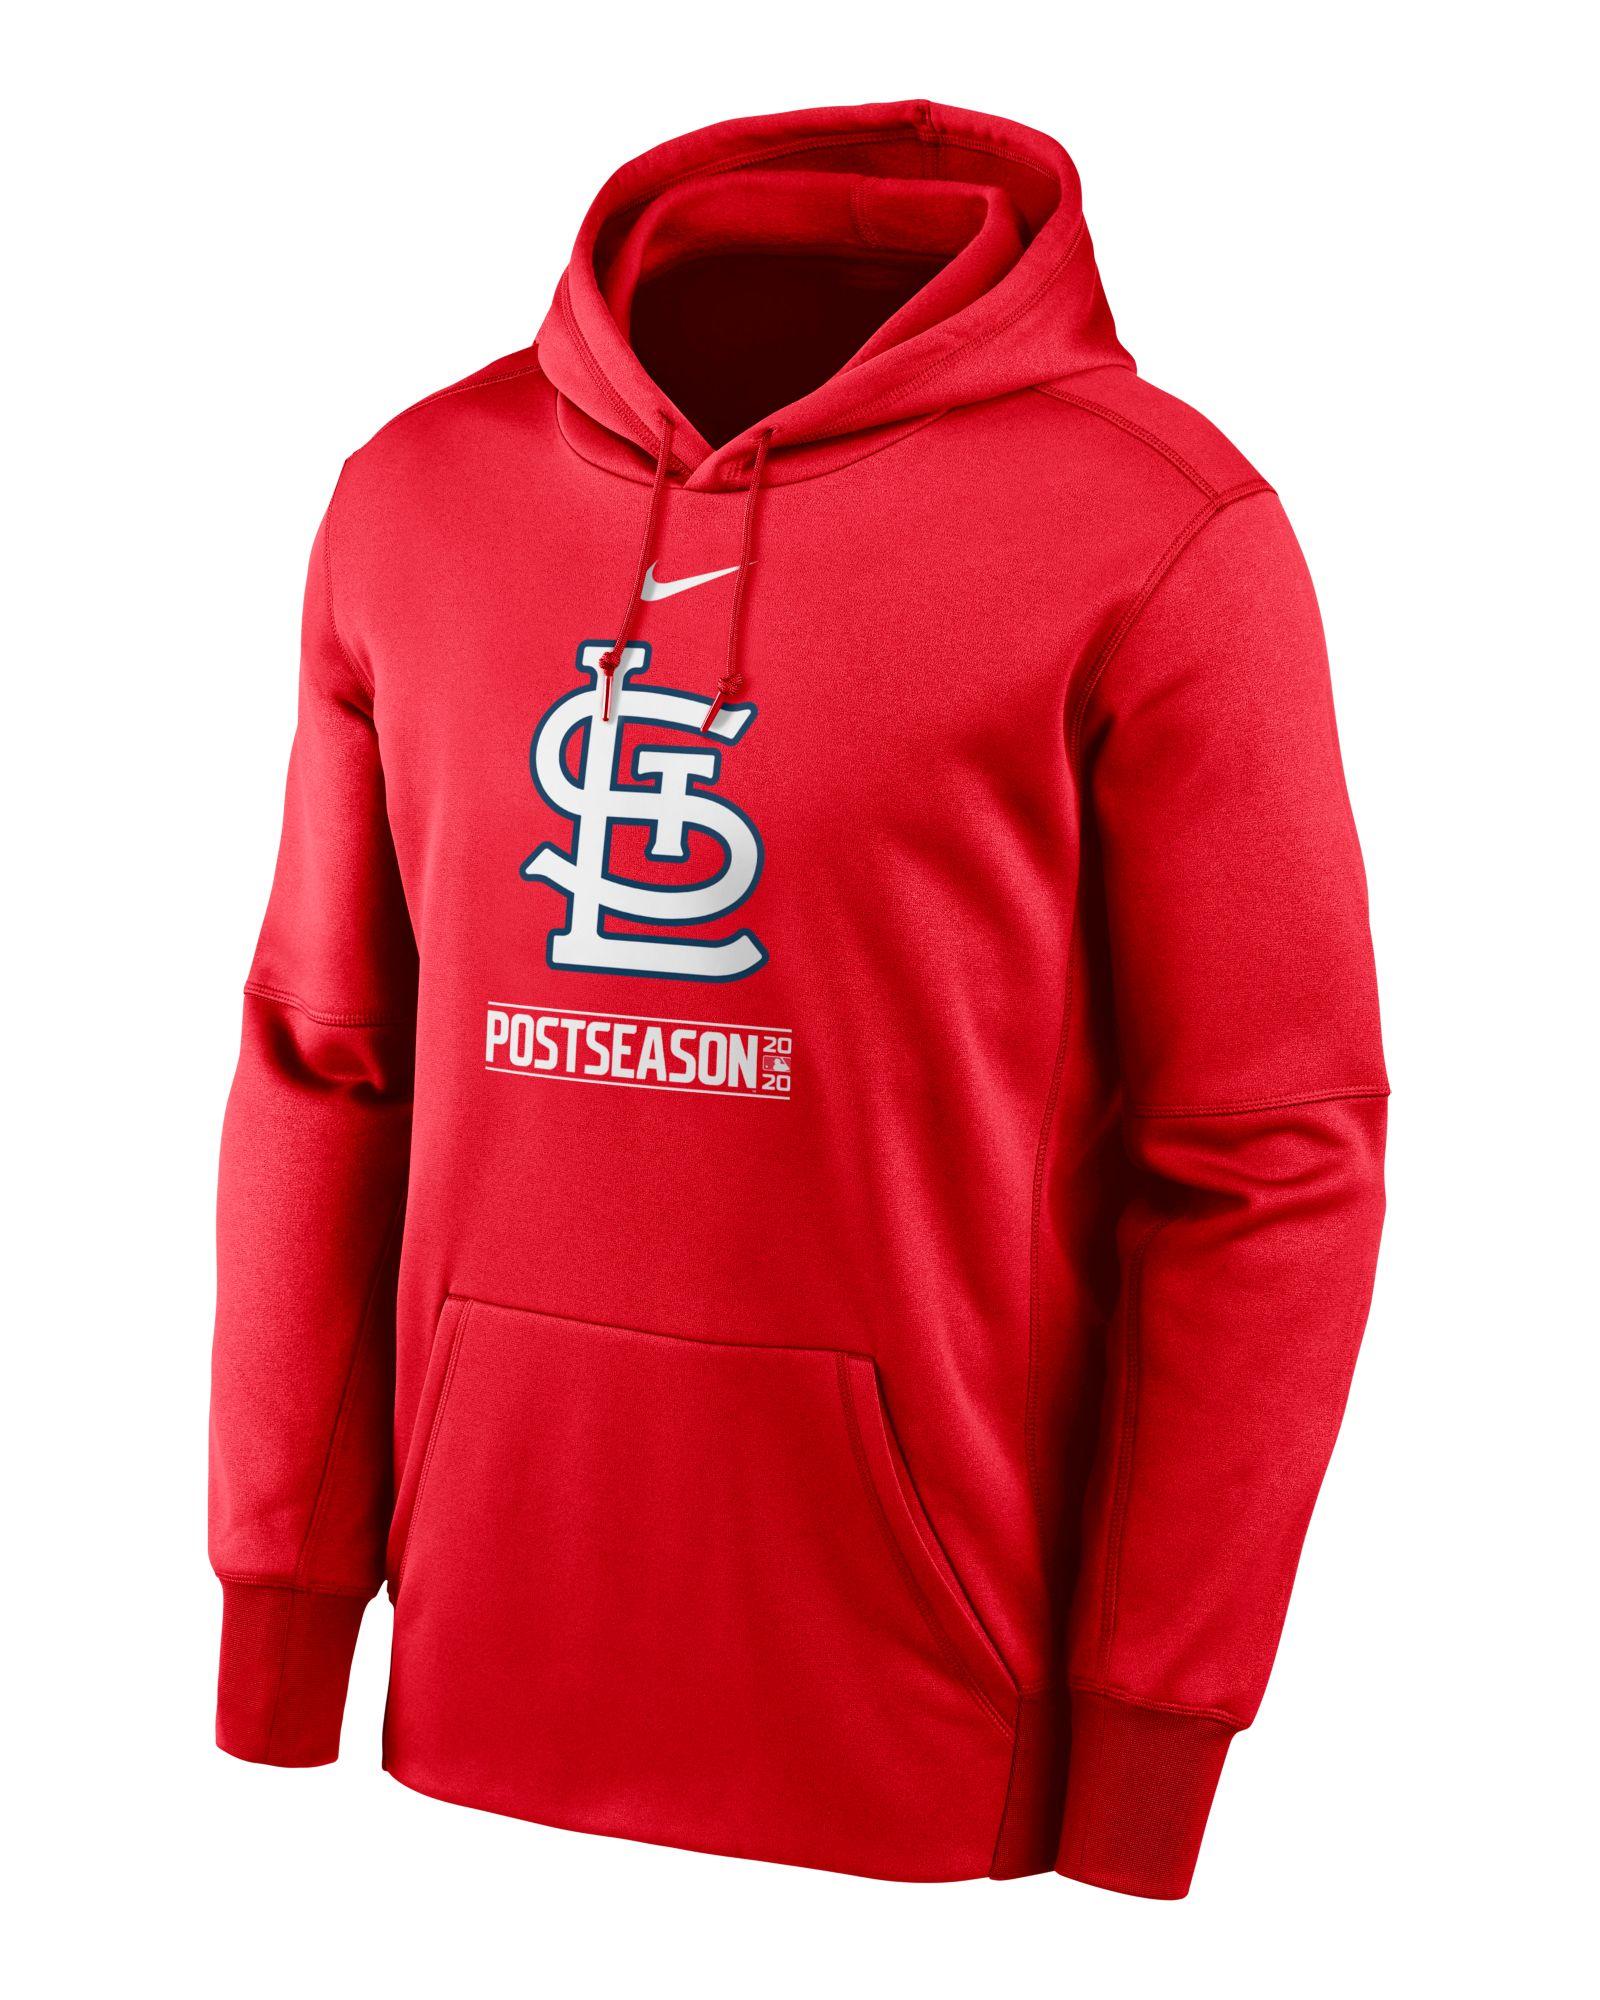 Nike 2020 Postseason St. Louis Cardinals Pullover Hoodie in Red for Men - Lyst